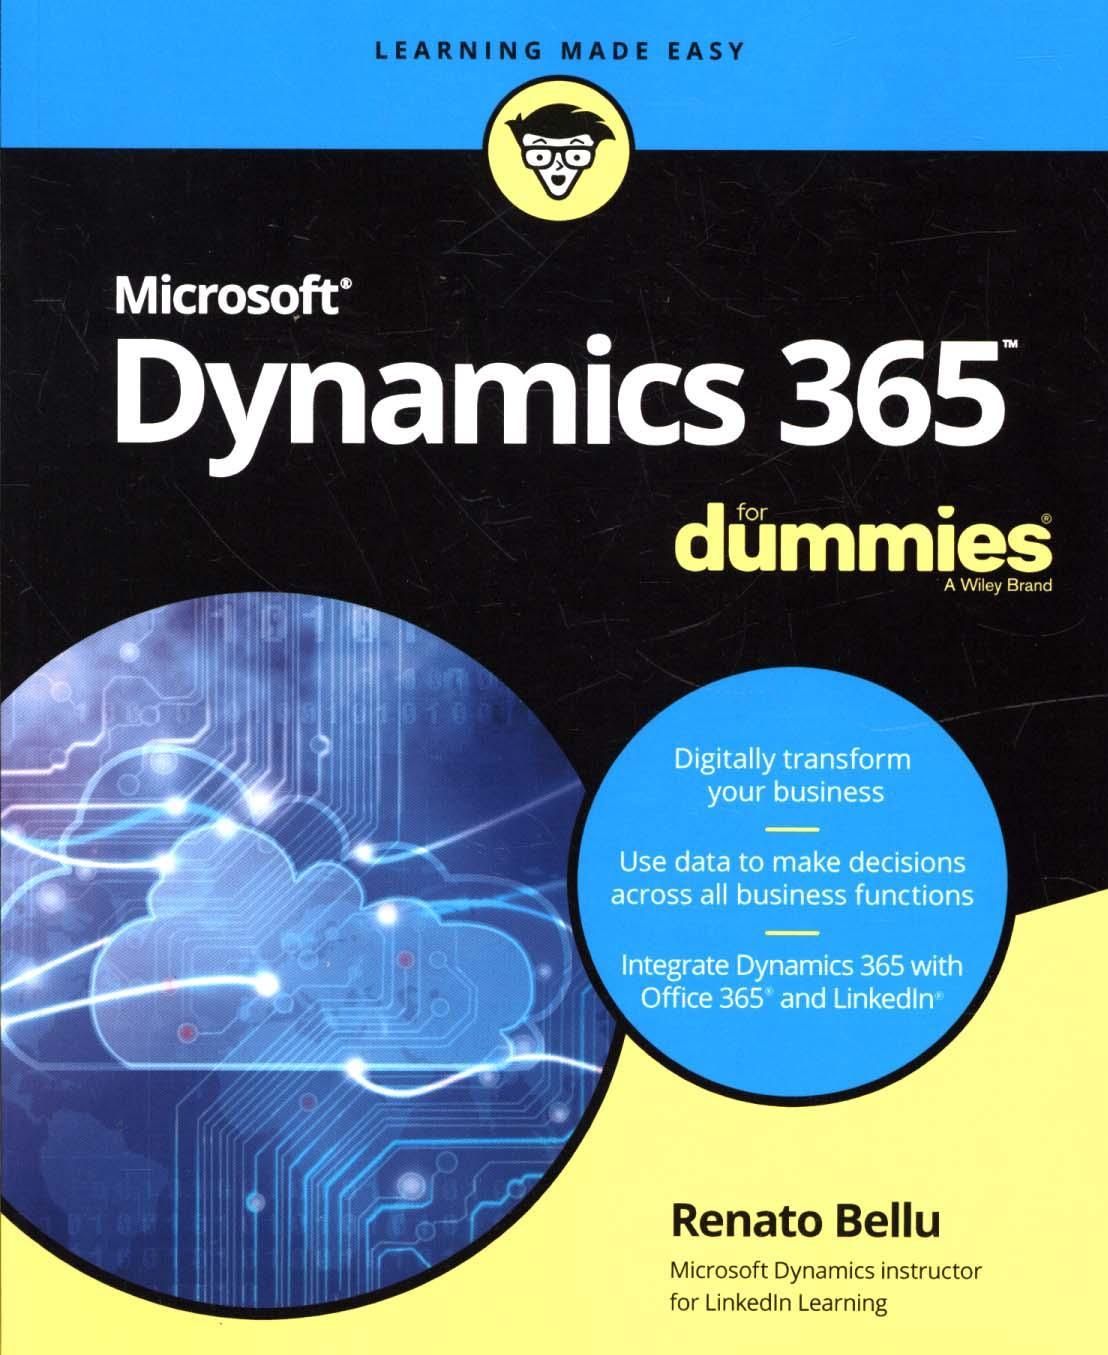 Microsoft Dynamics 365 For Dummies